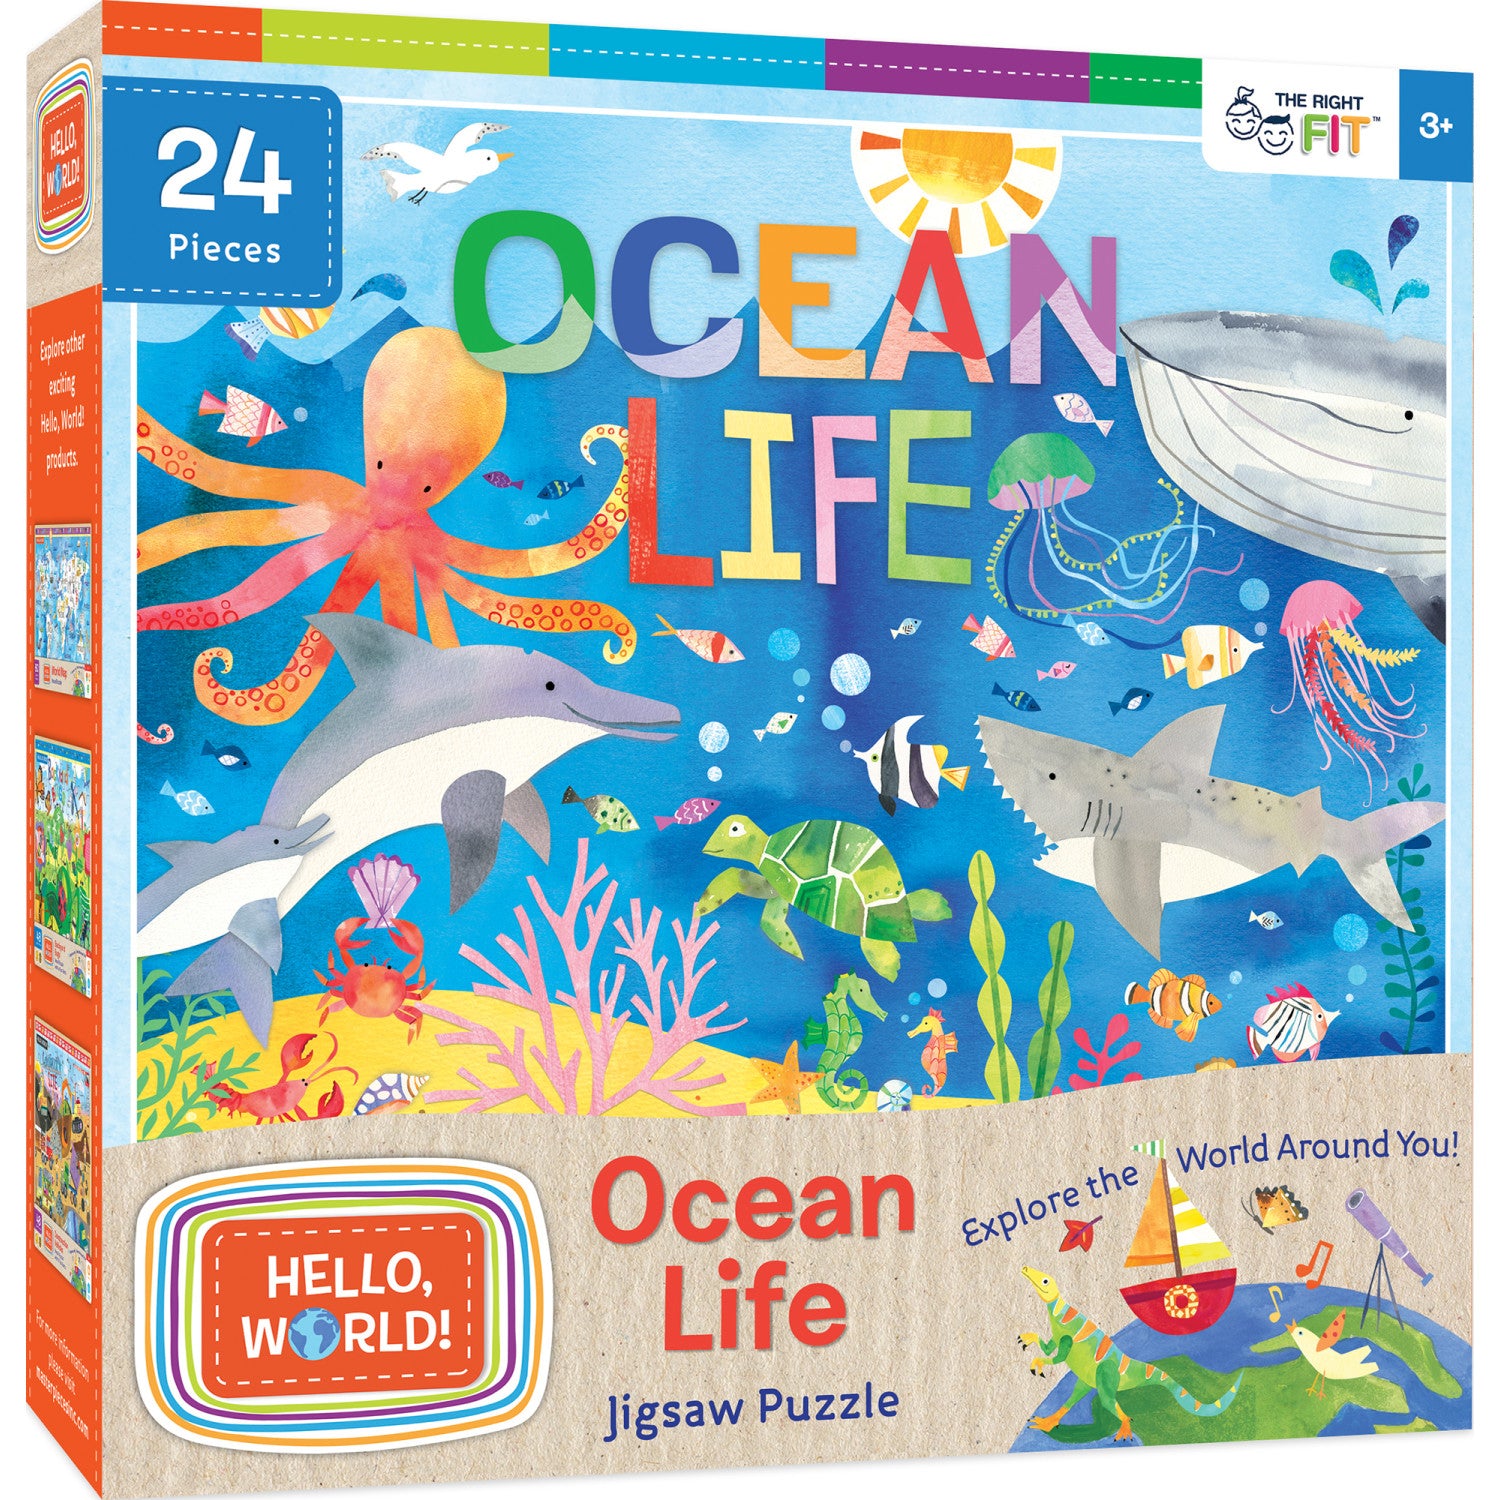 Hello, World! - Ocean Life 24 Piece Jigsaw Puzzle